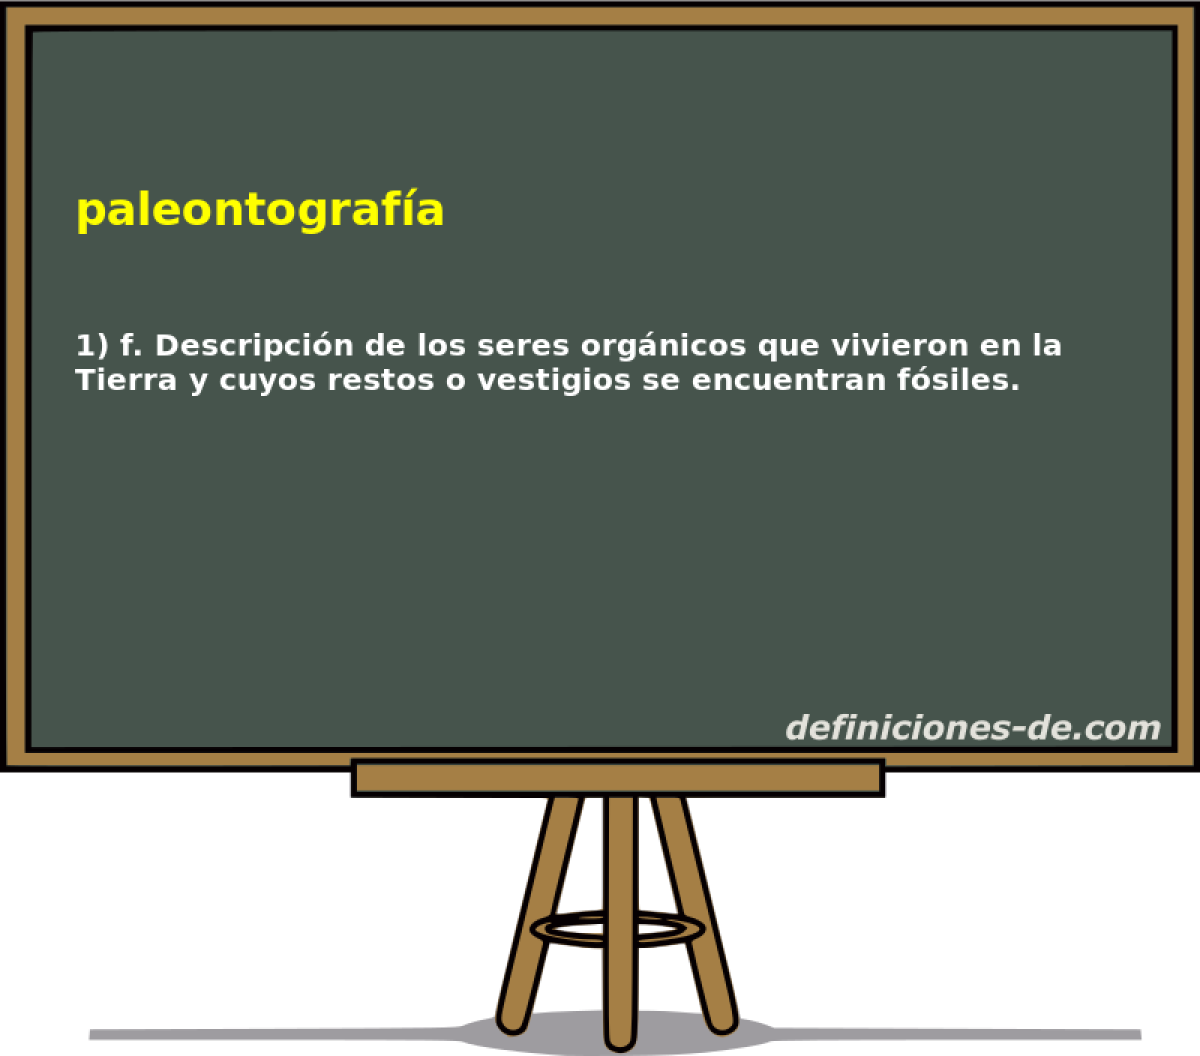 paleontografa 